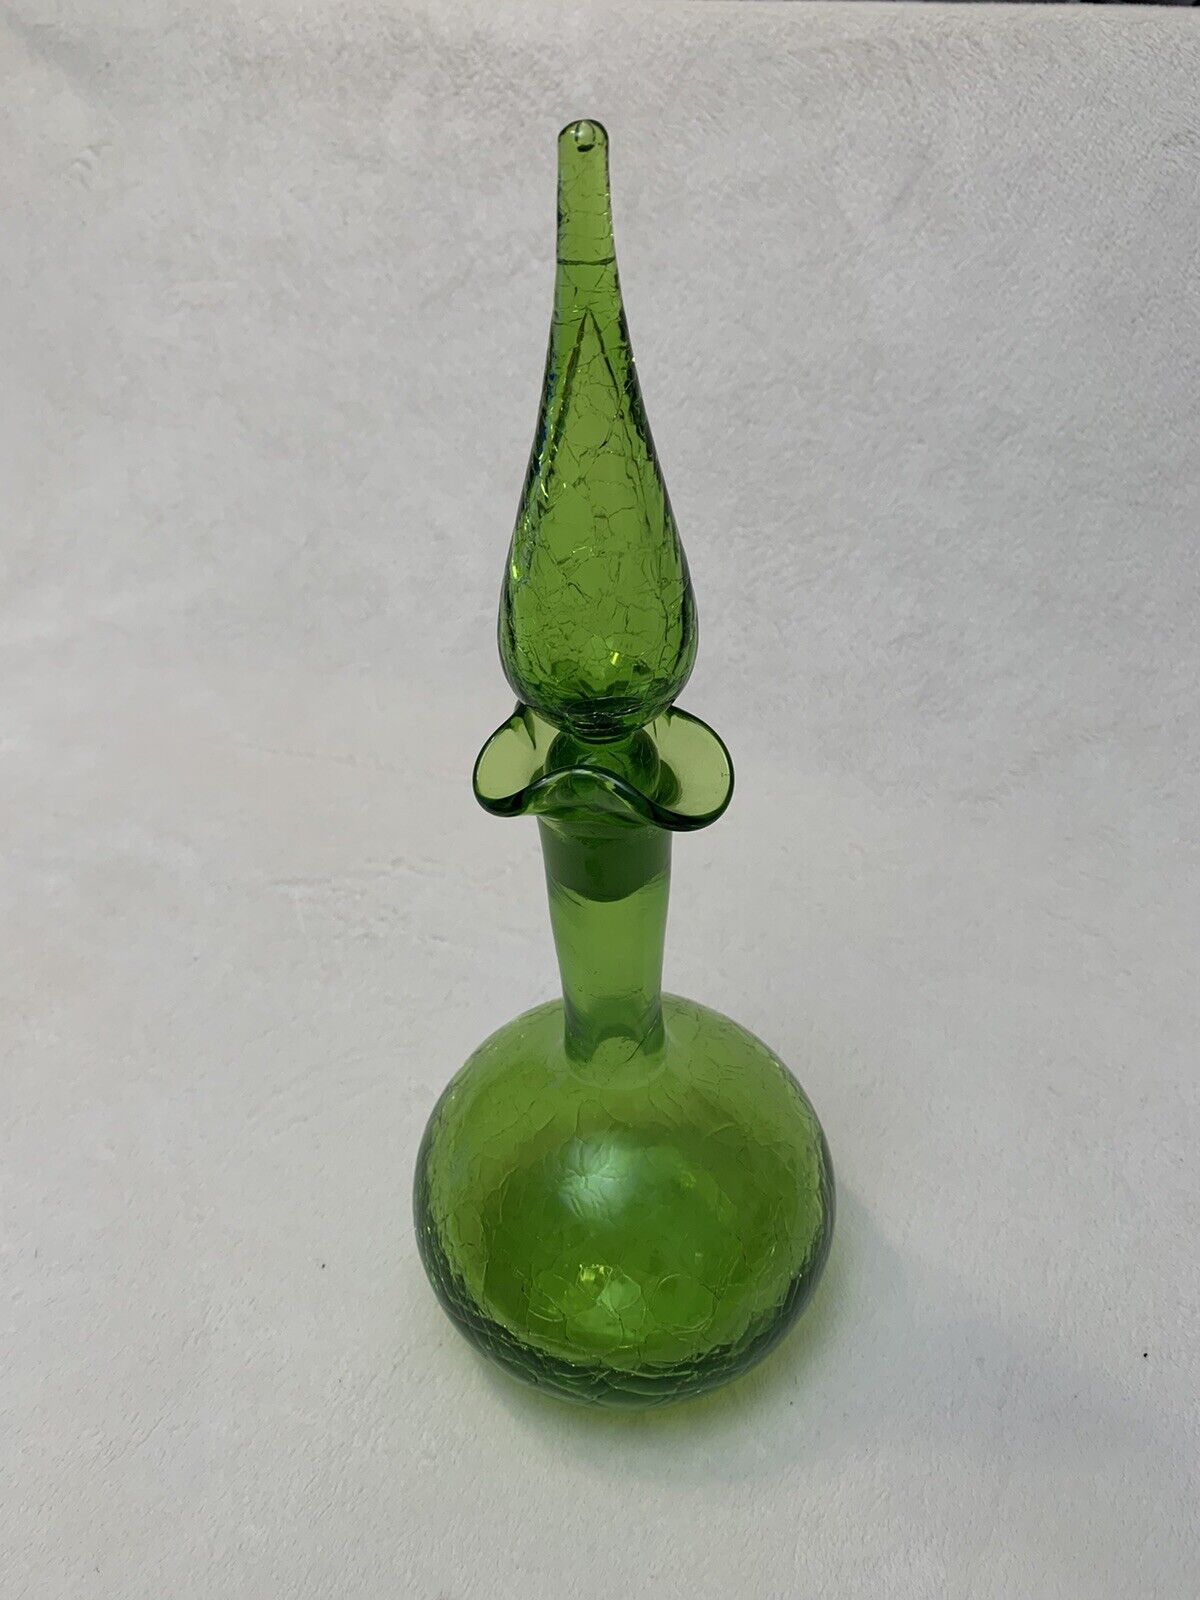 Blenko Style Hand Blown Green Cracked Glass Decanter Bottle